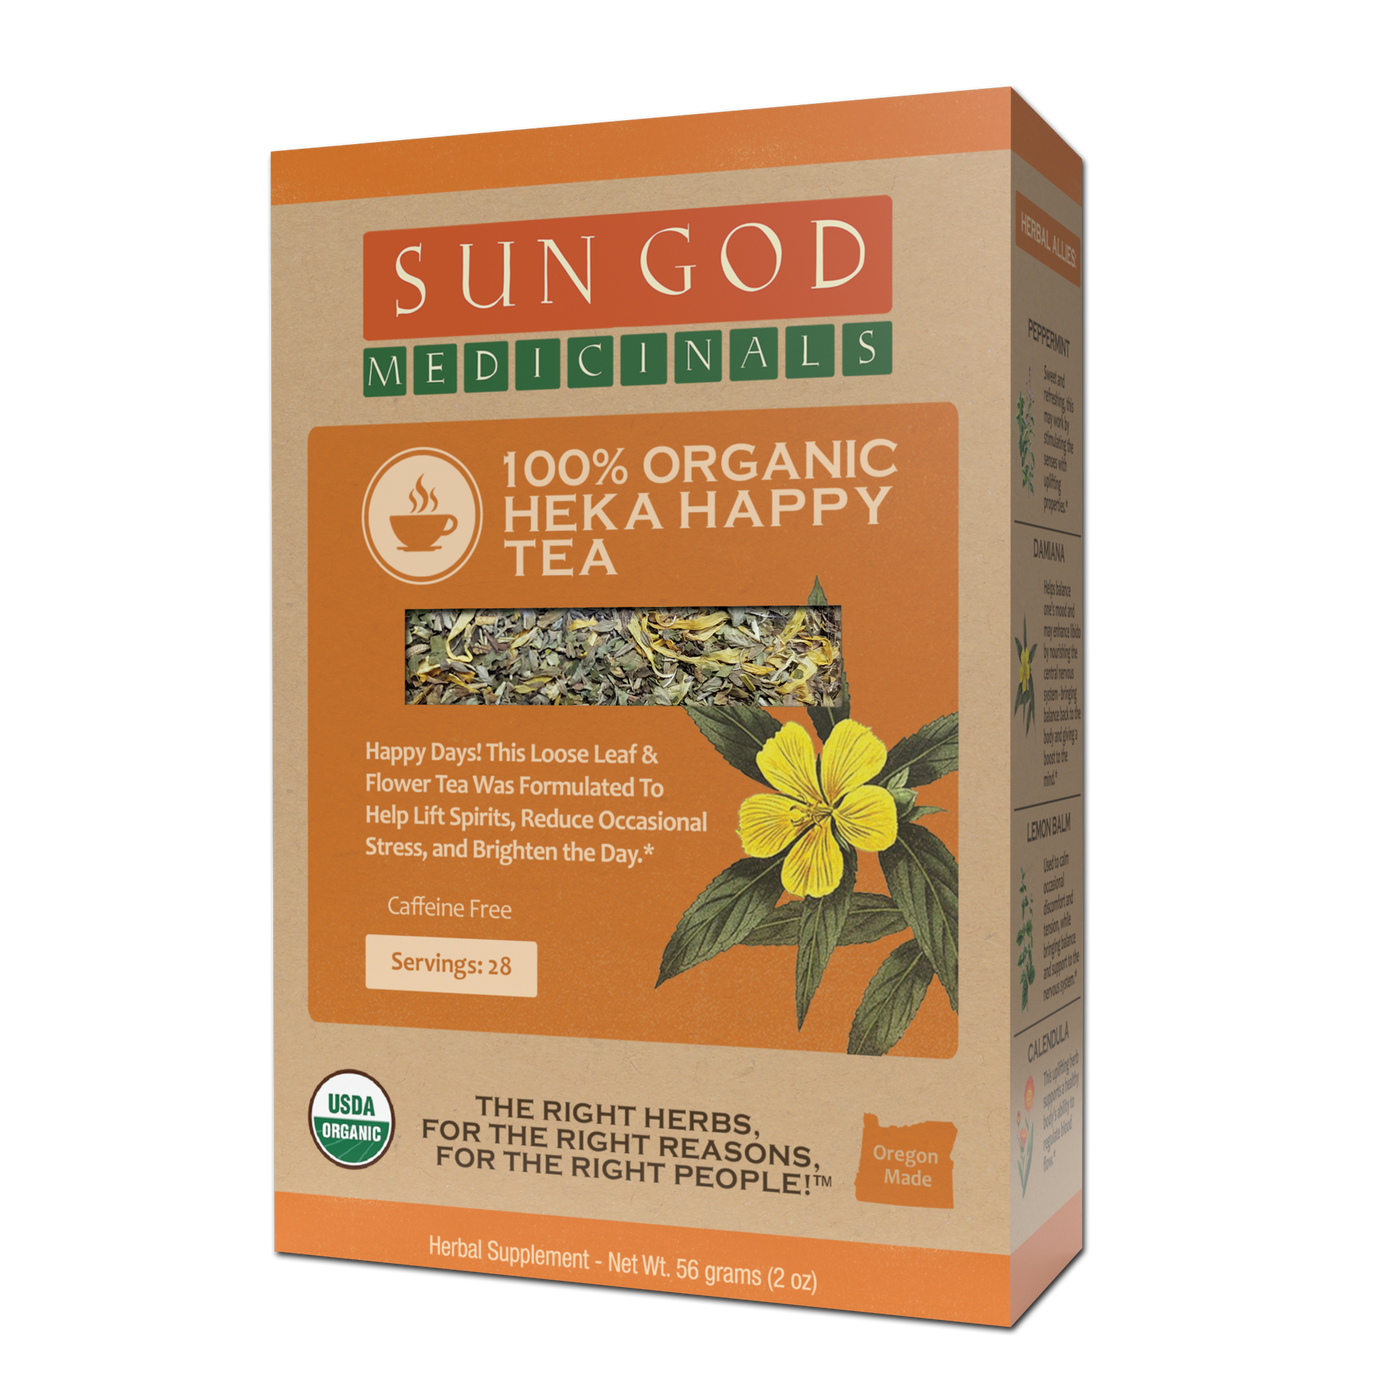 Heka Happy Organic Herbal Tea - Sun God Medicinals